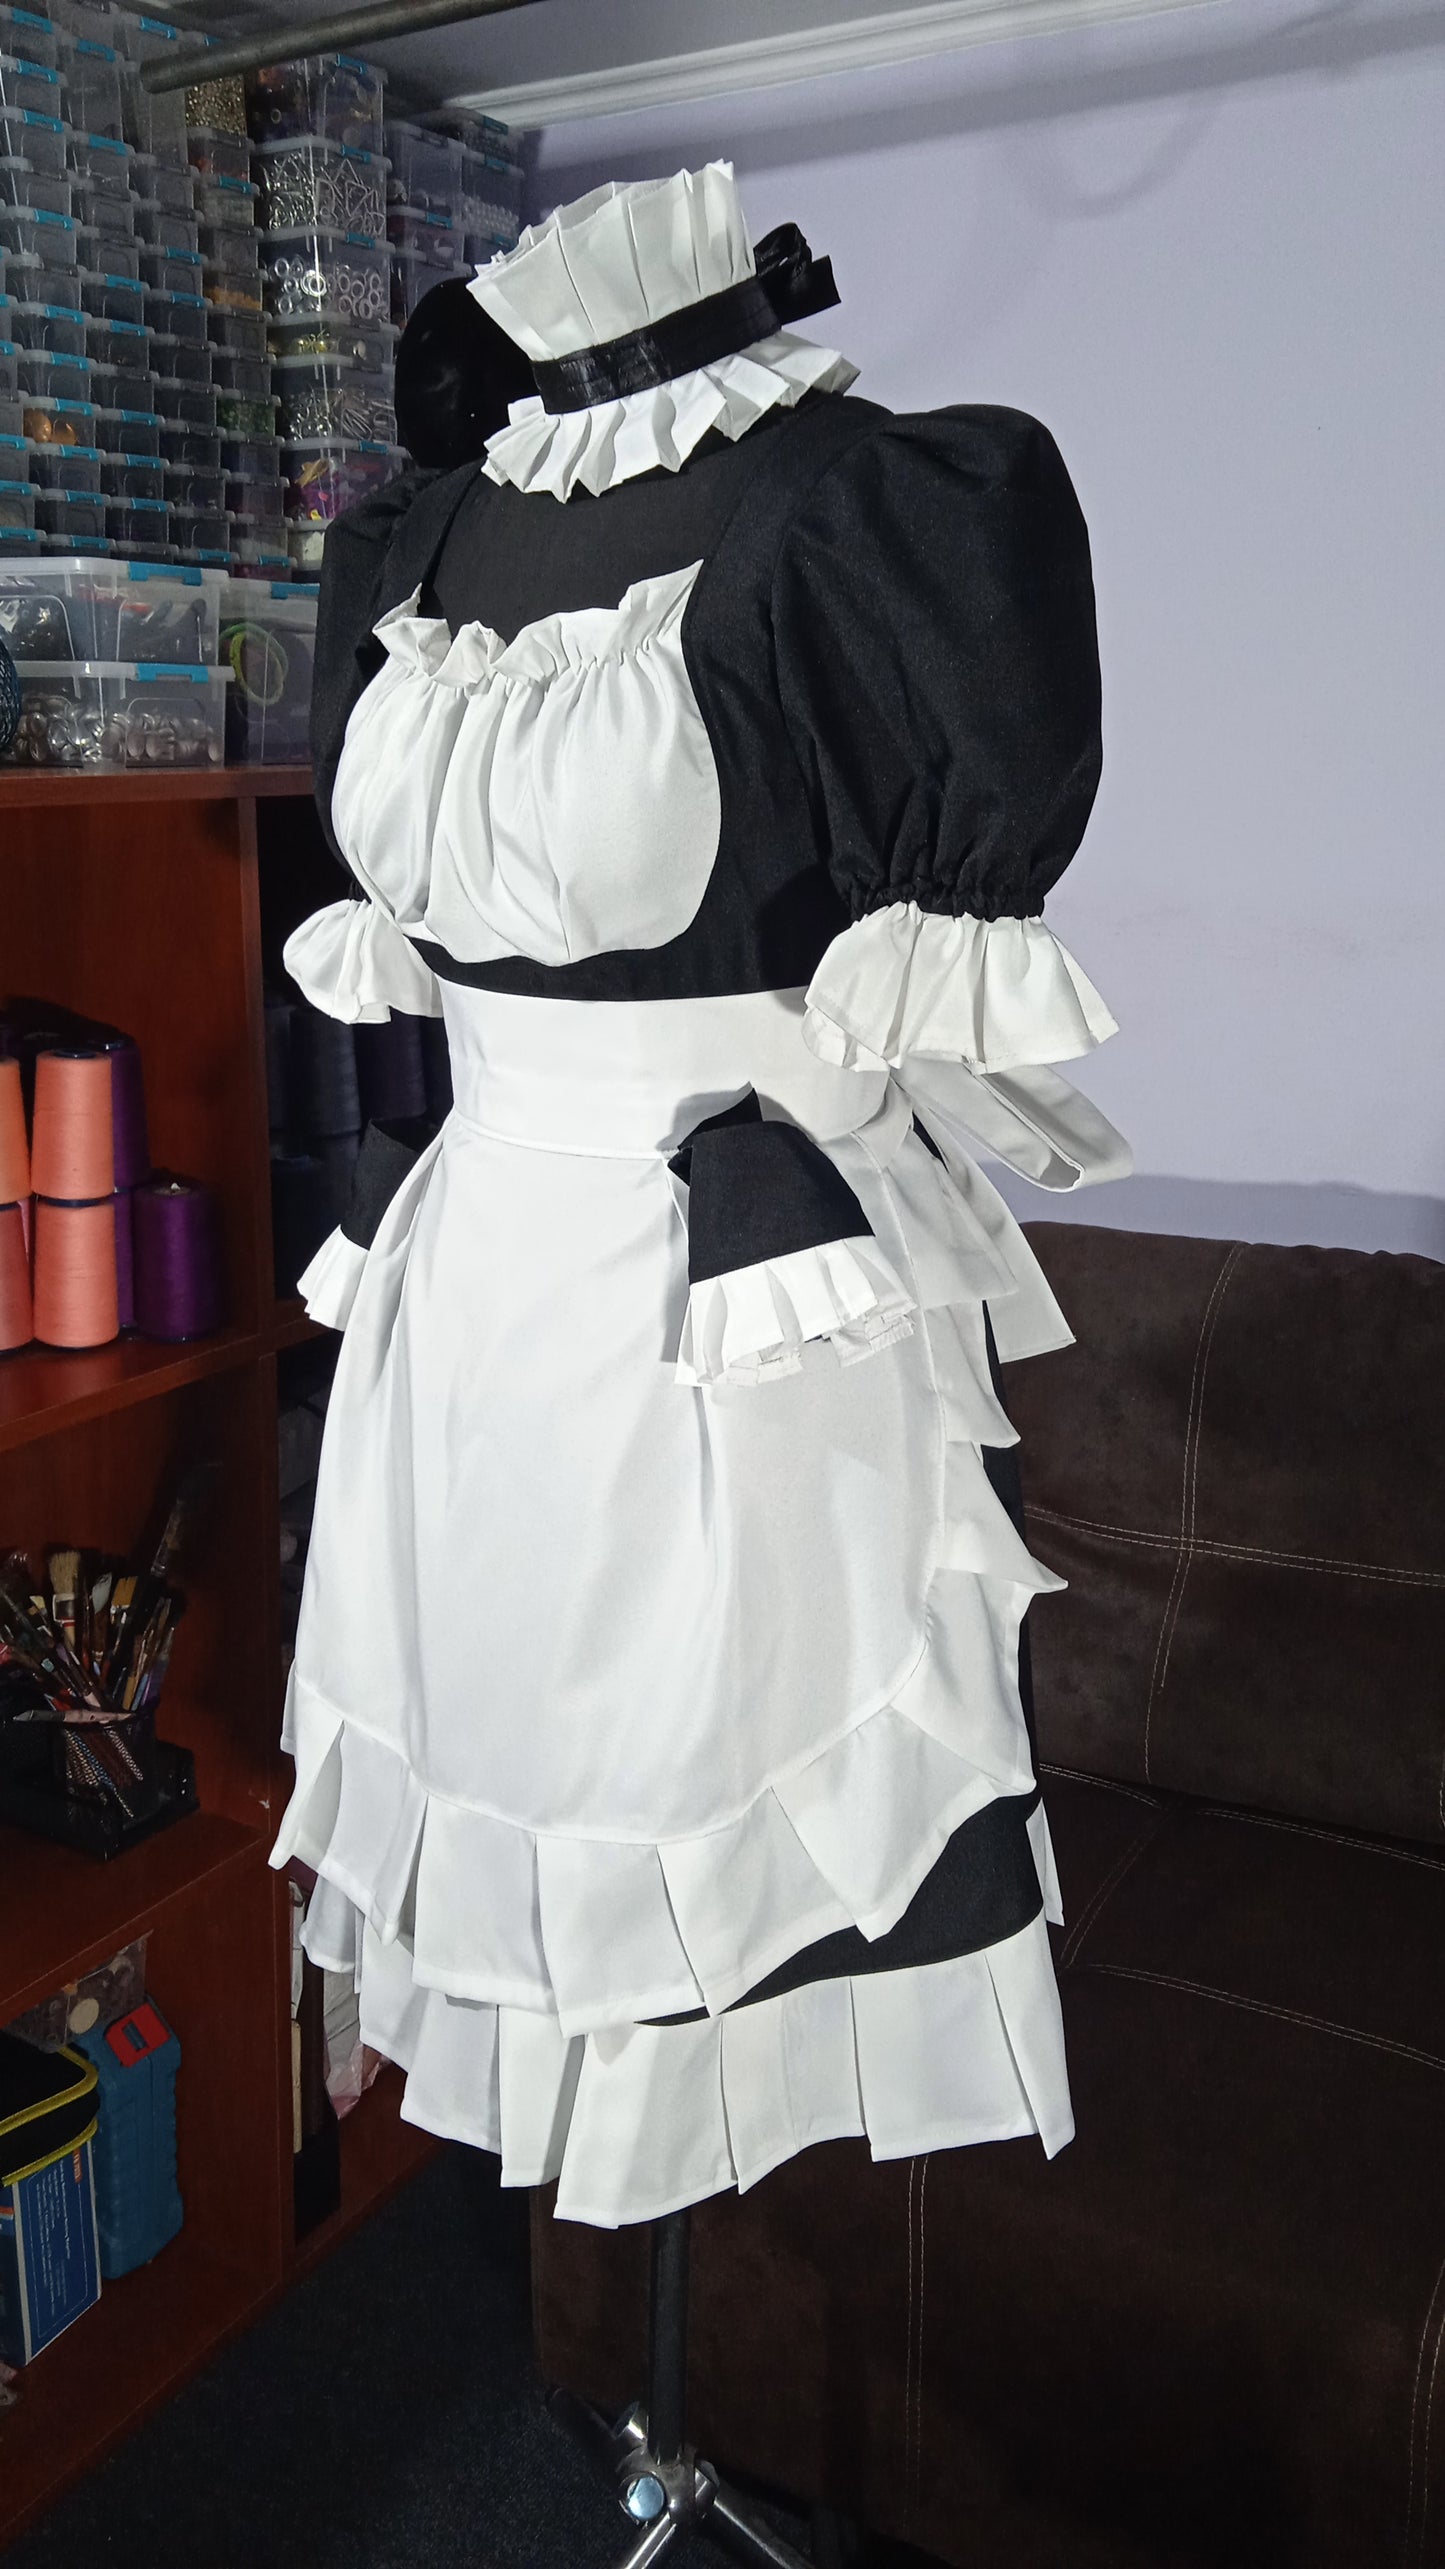 Custom made Maid dress / hand made / maid cosplay / black - white dress / sweet maid / sexy maid